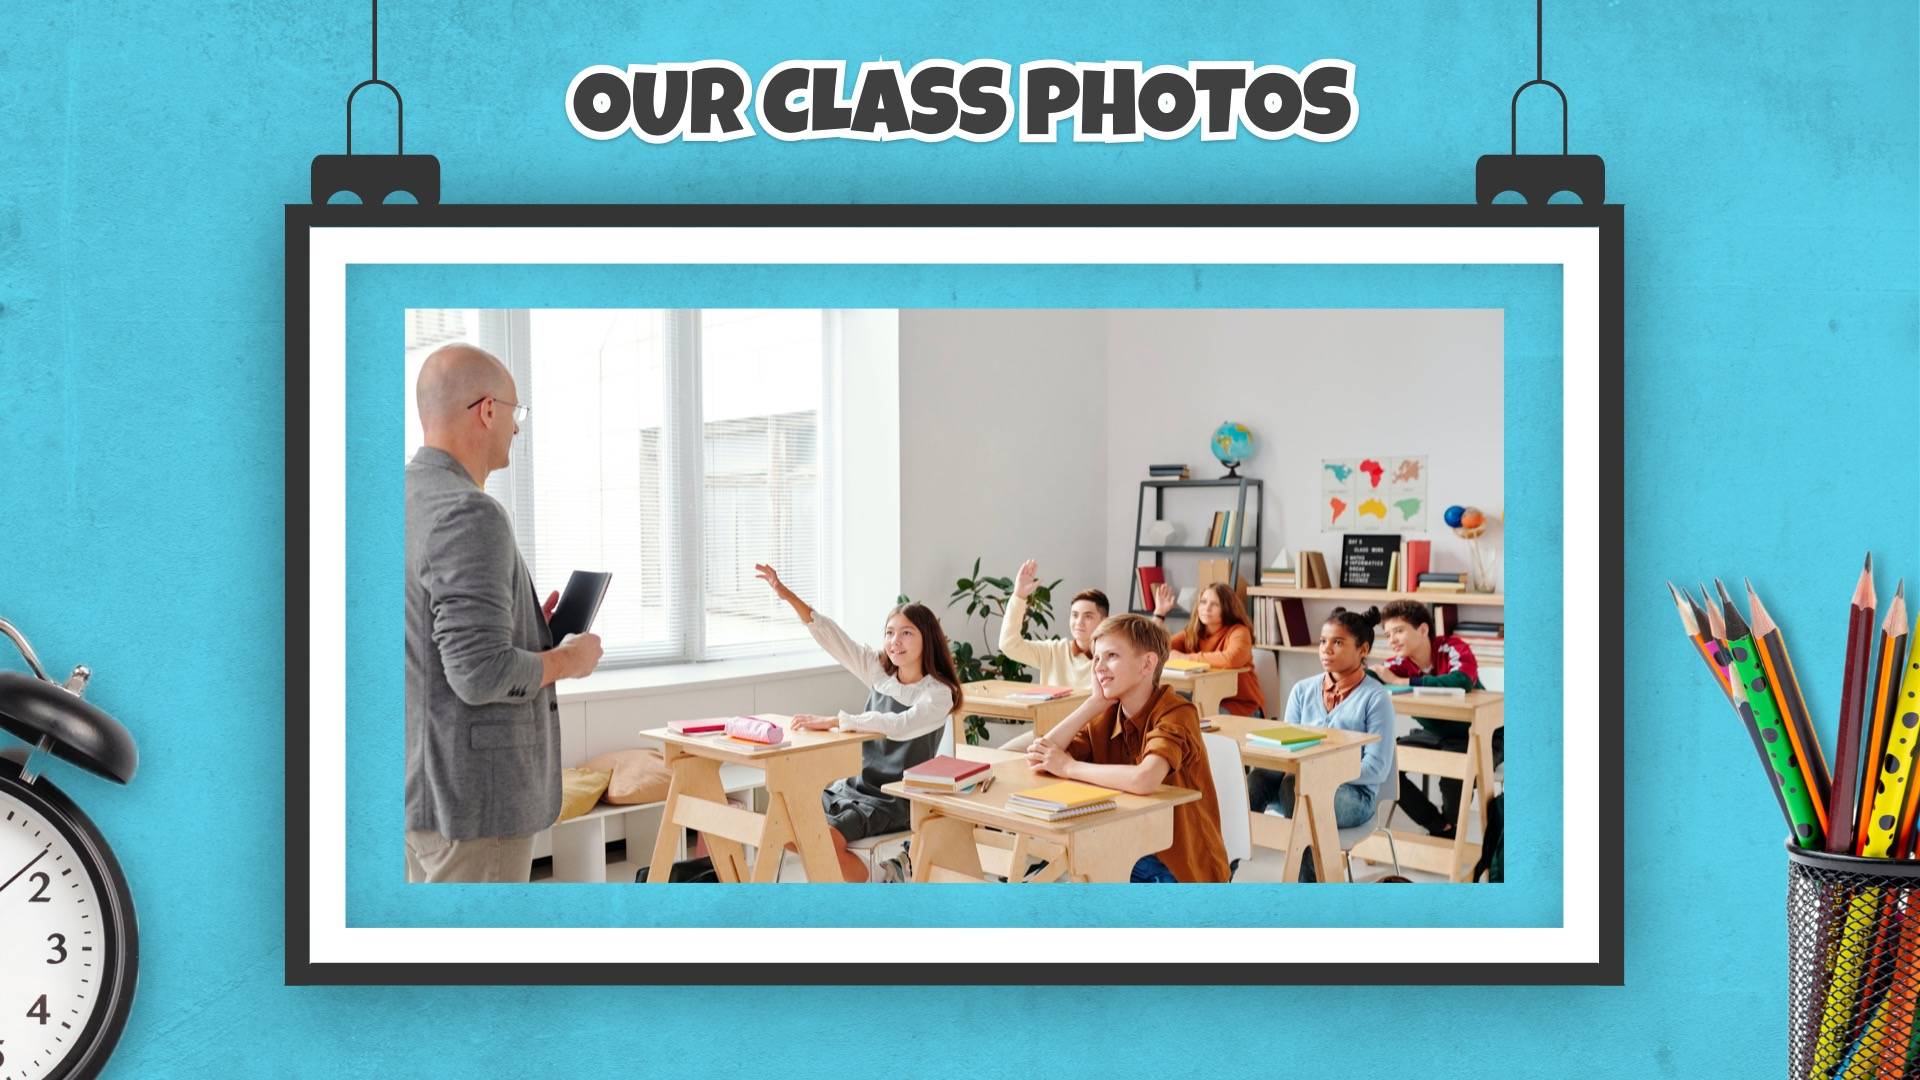 Classroom Album Photos Digital Signage Template